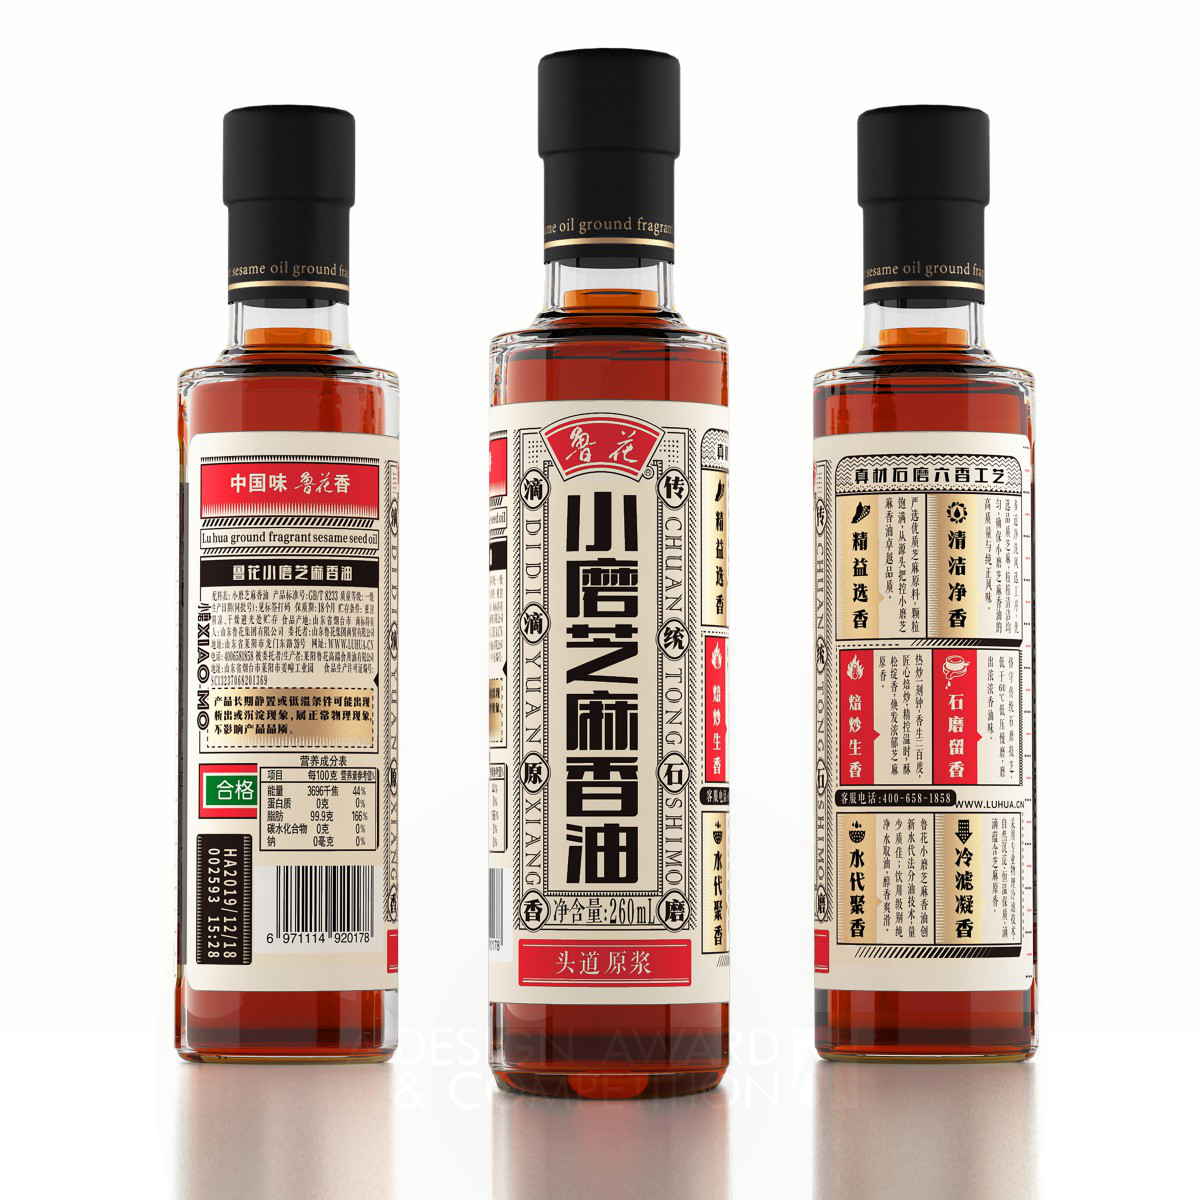 TIGER PAN's Luhua Xiaomo Revolutionizes Sesame Oil Packaging